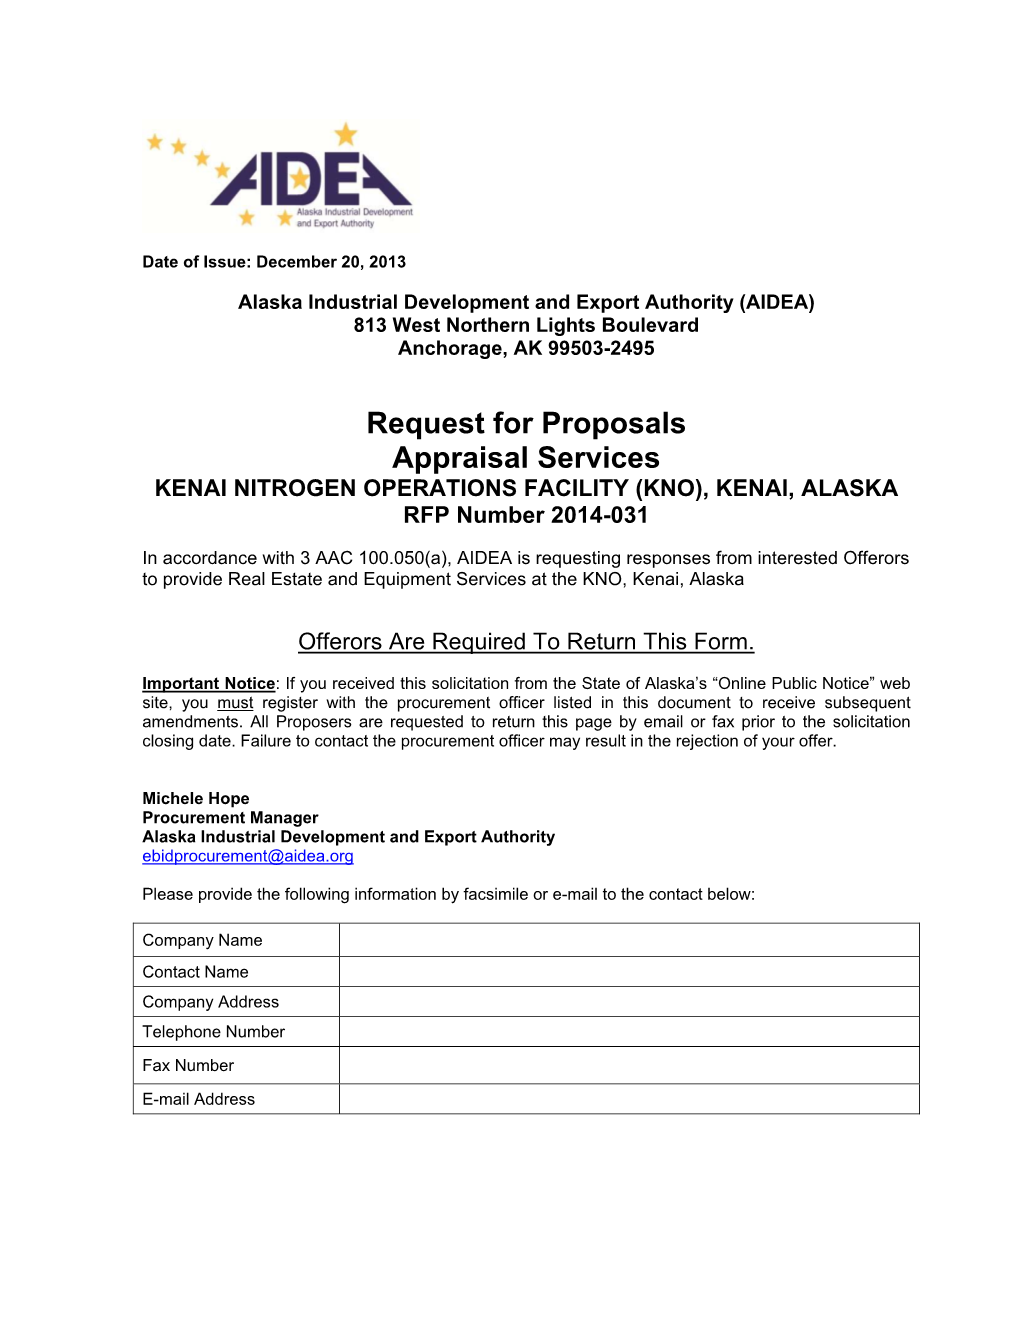 Request for Proposals Appraisal Services KENAI NITROGEN OPERATIONS FACILITY (KNO), KENAI, ALASKA RFP Number 2014-031